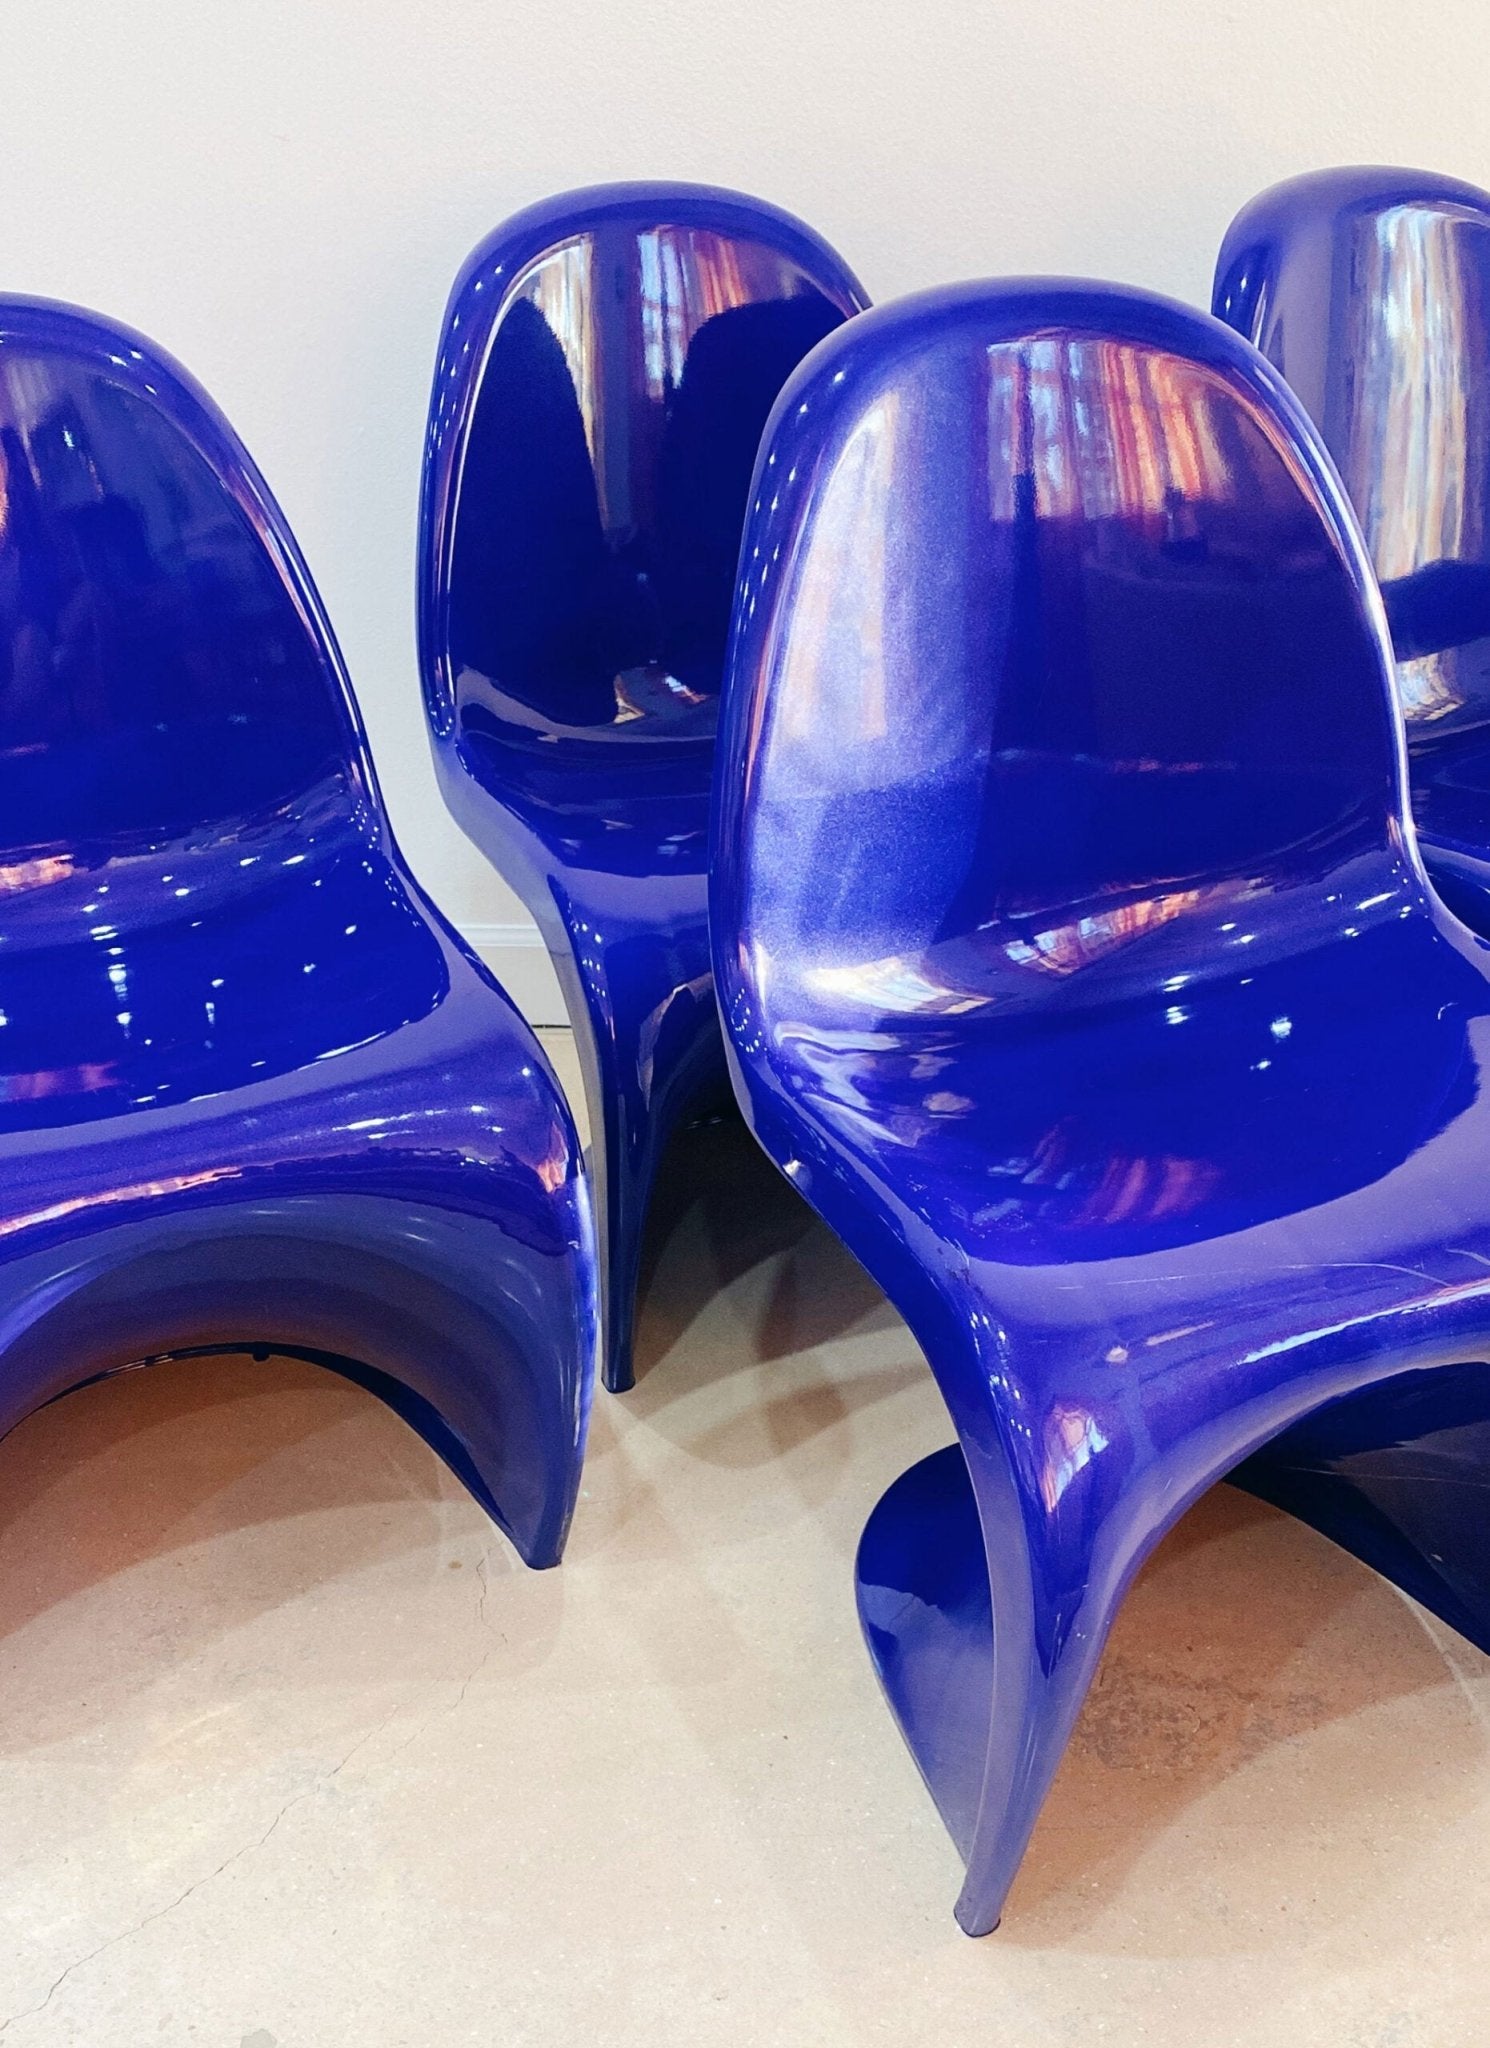 Brilliant Blue Panton Chair - Rehaus